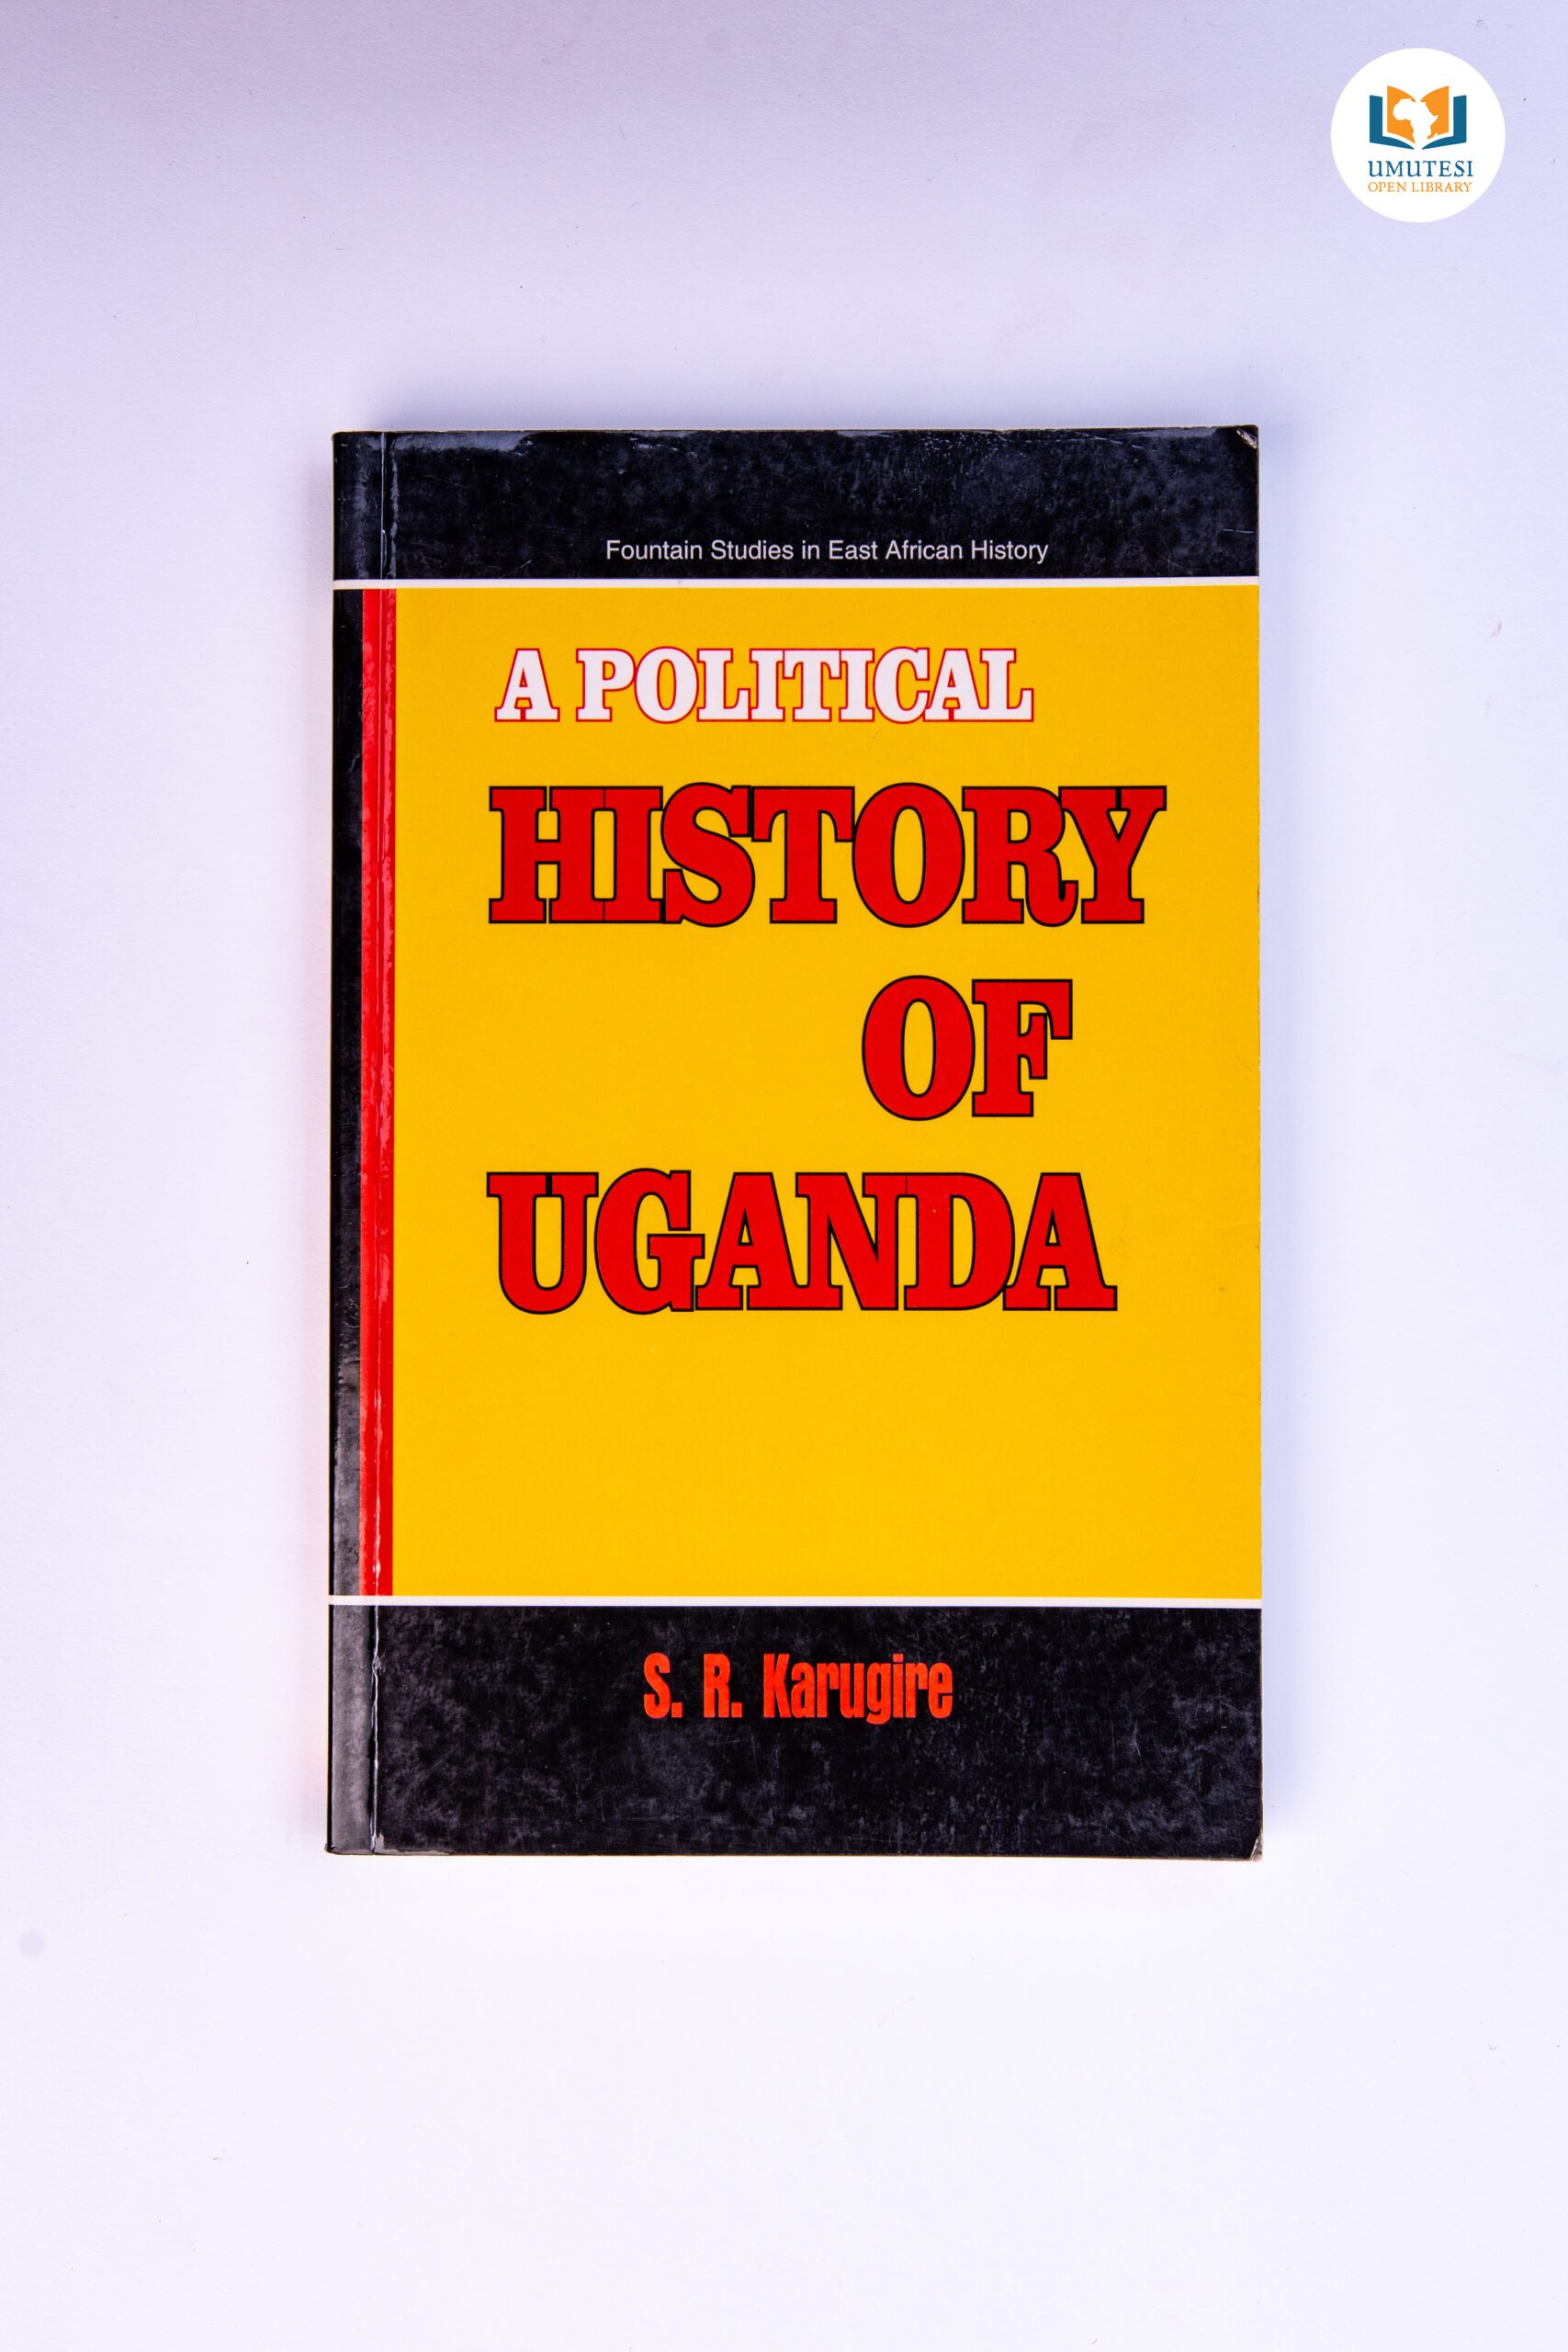 A Political History of Uganda by S. R. Karugire